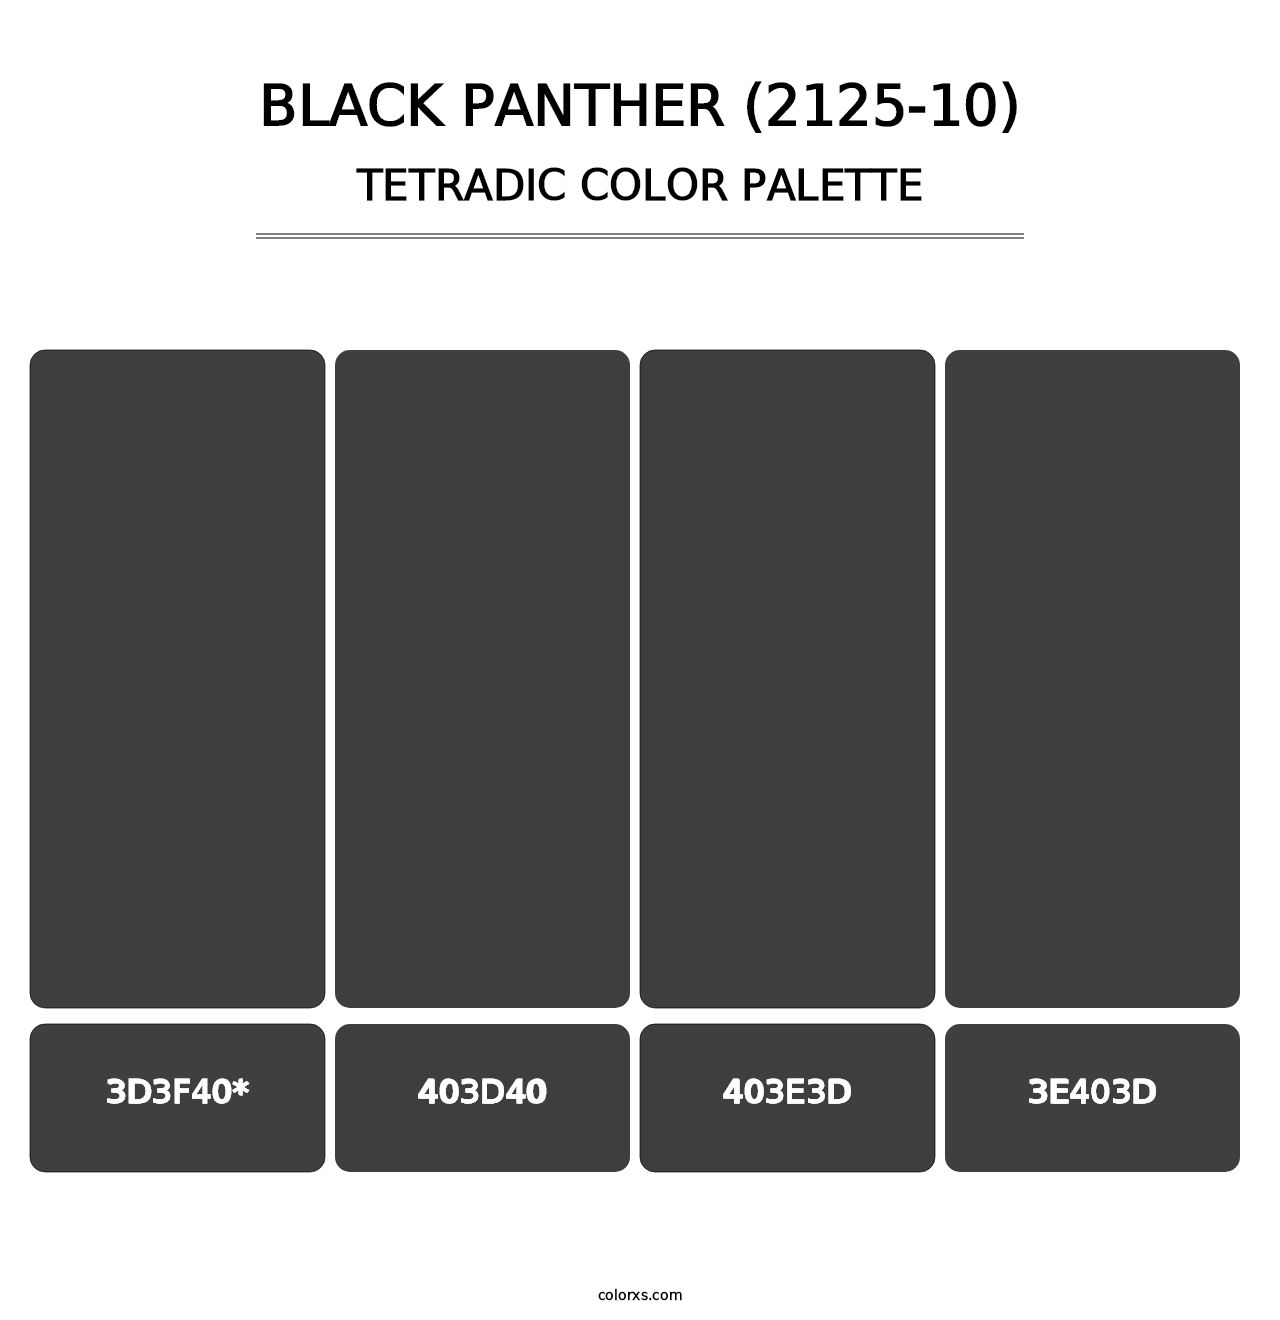 Black Panther (2125-10) - Tetradic Color Palette